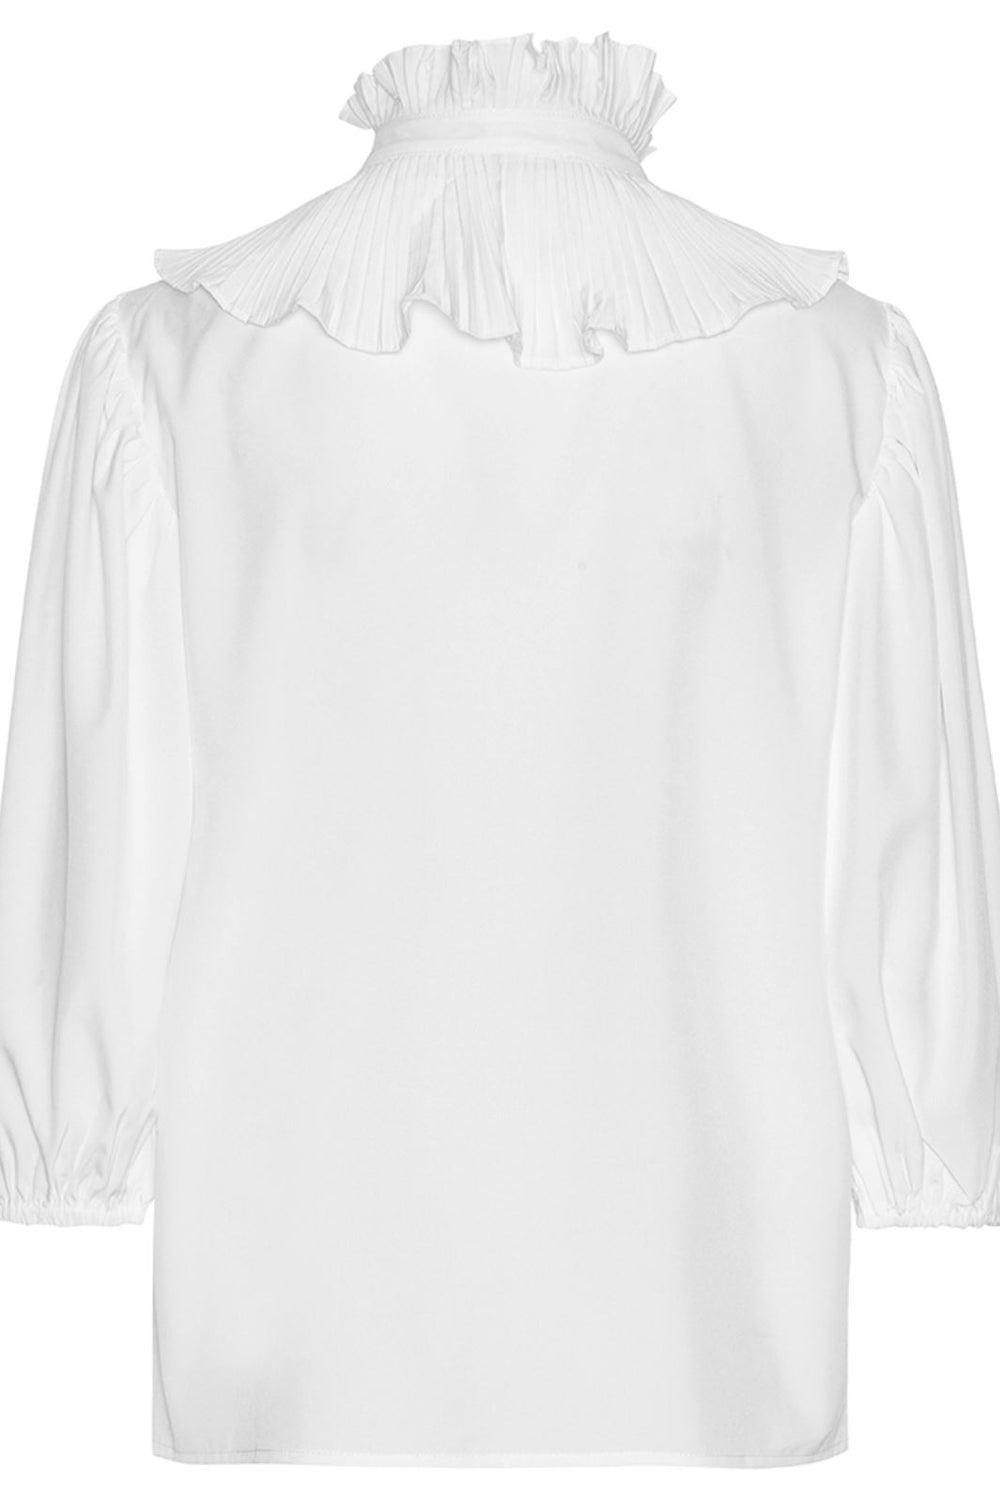 Continue - Pernille 3/4 Sleeve - 02 White Skjorter 